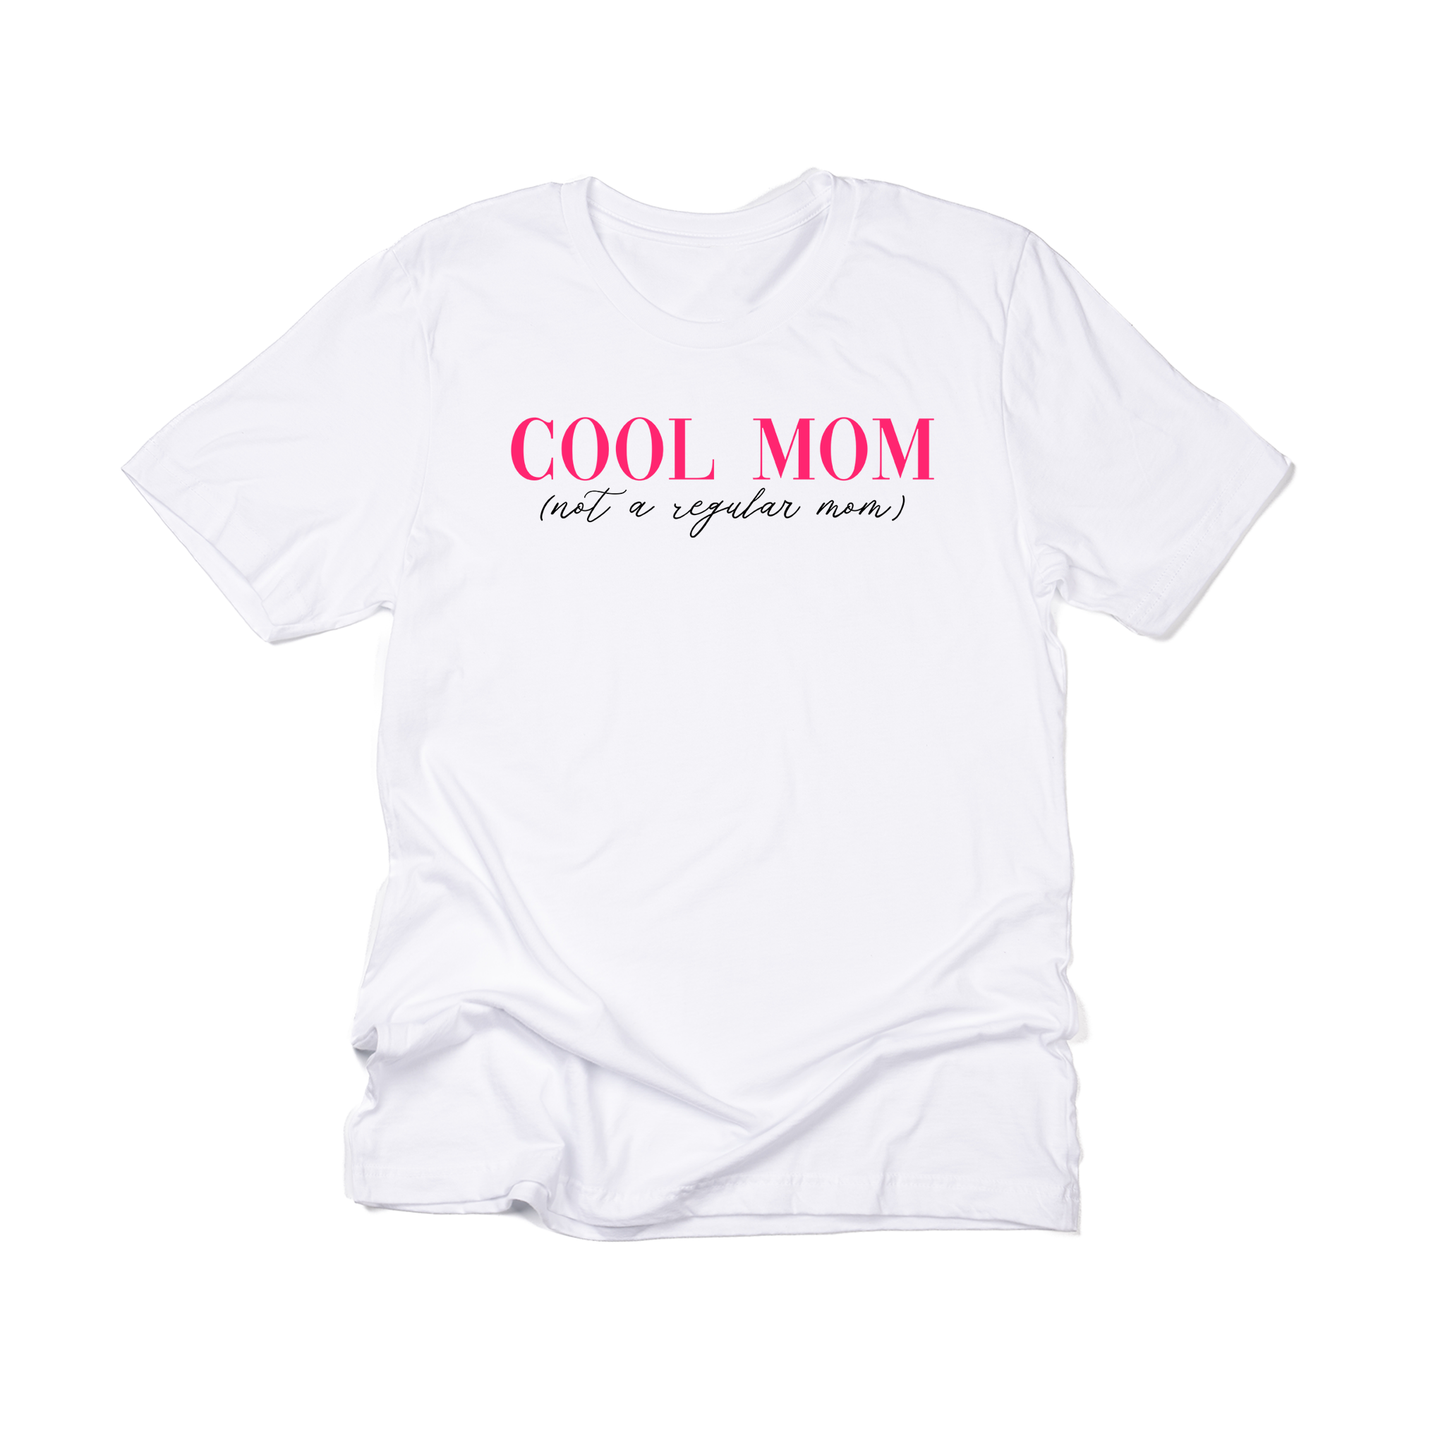 Cool Mom (Not A Regular Mom) - Tee (White)